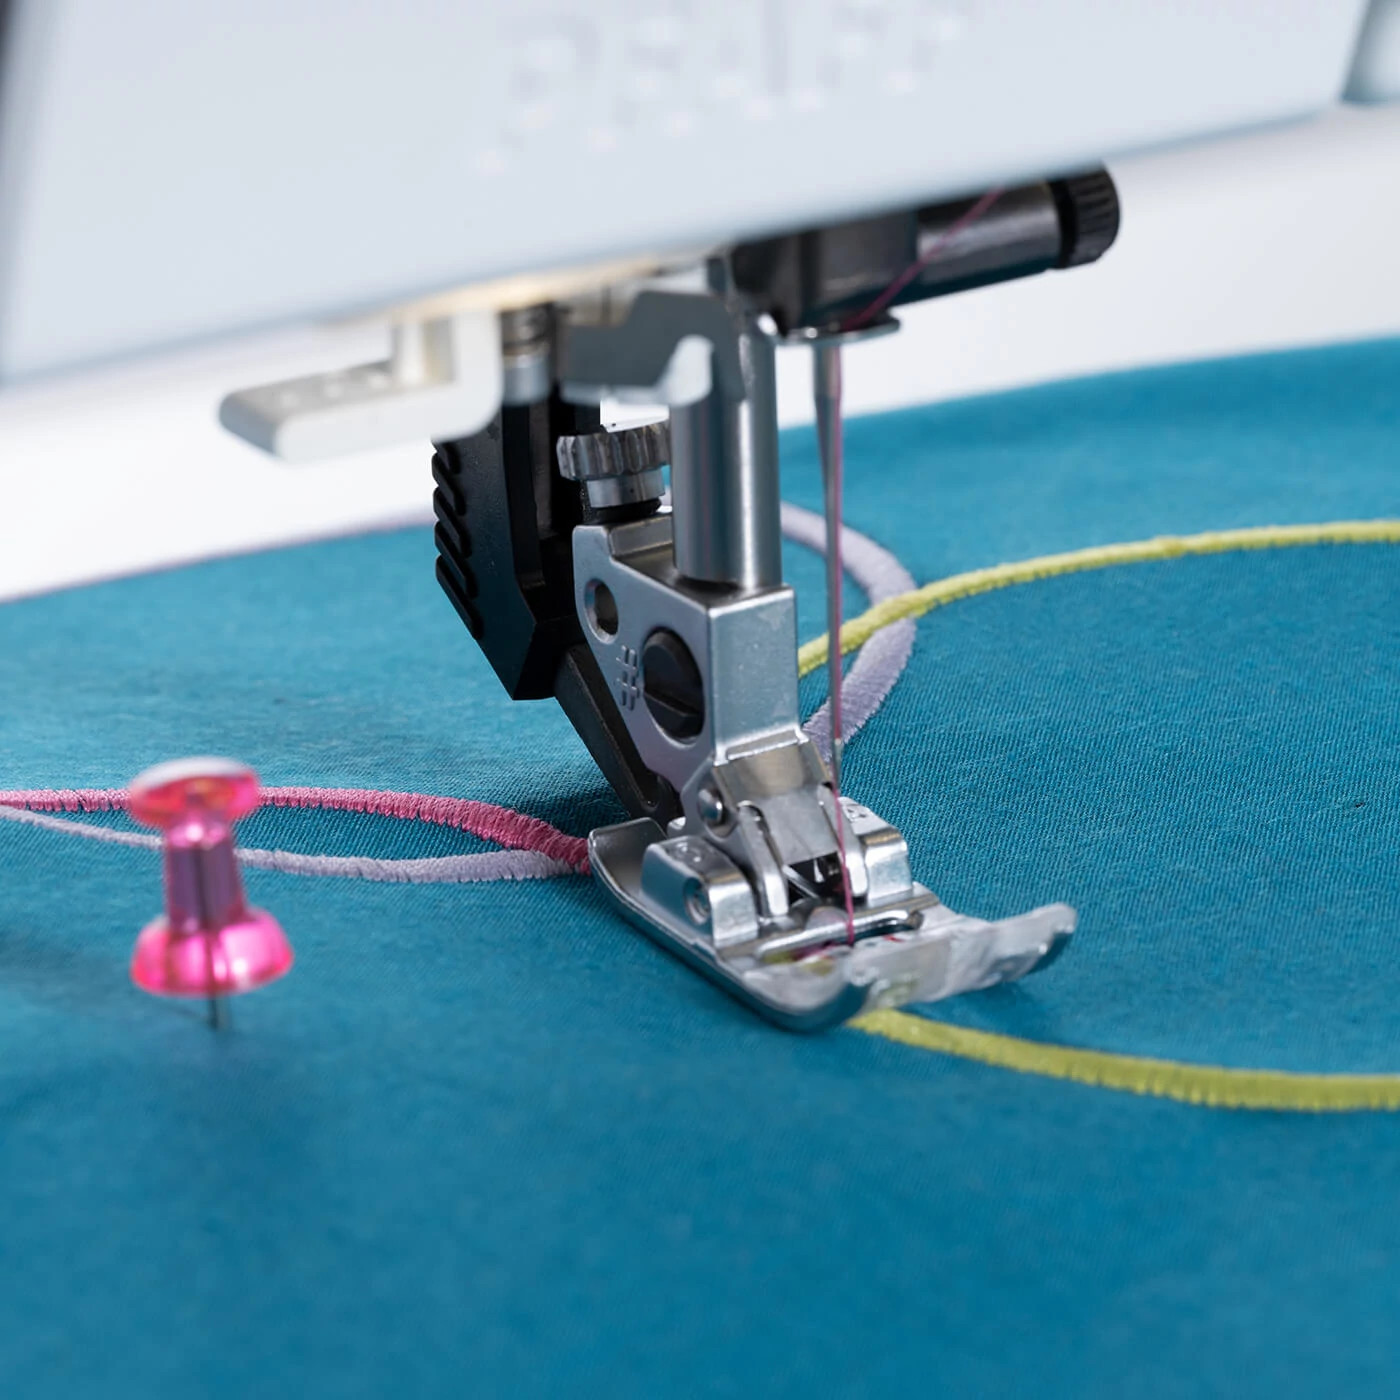 ambition™ 620 Sewing Machine + GIFT w/PURCHASE